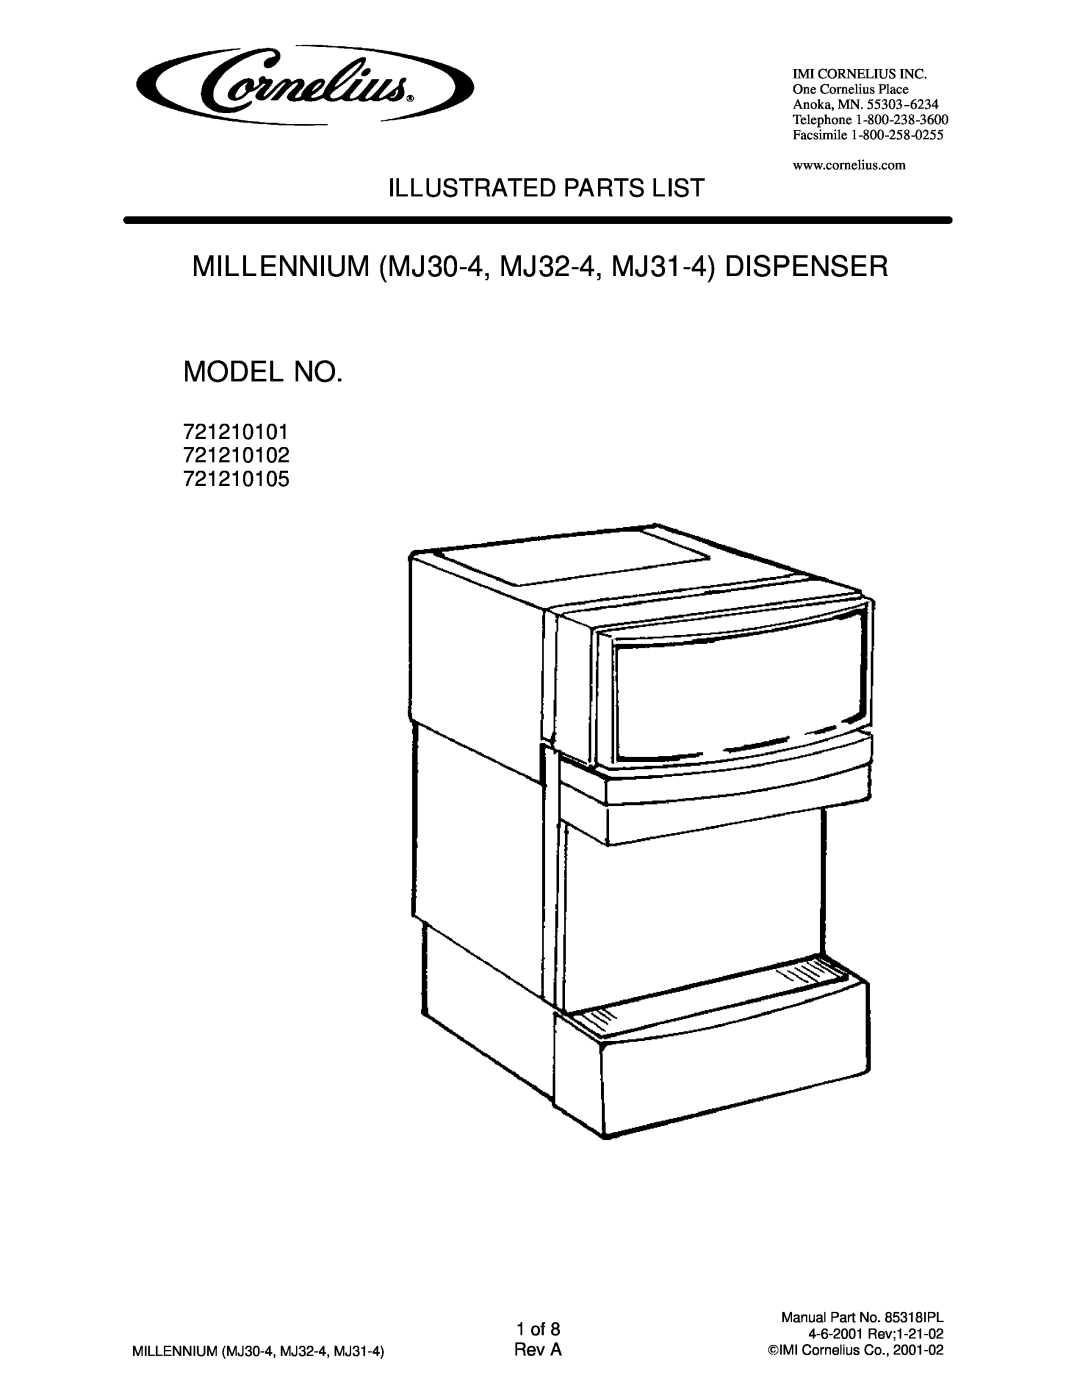 Panasonic 721210102 manual MILLENNIUM MJ30-4, MJ32-4, MJ31-4 DISPENSER MODEL NO, Illustrated Parts List, 1 of, Rev A 